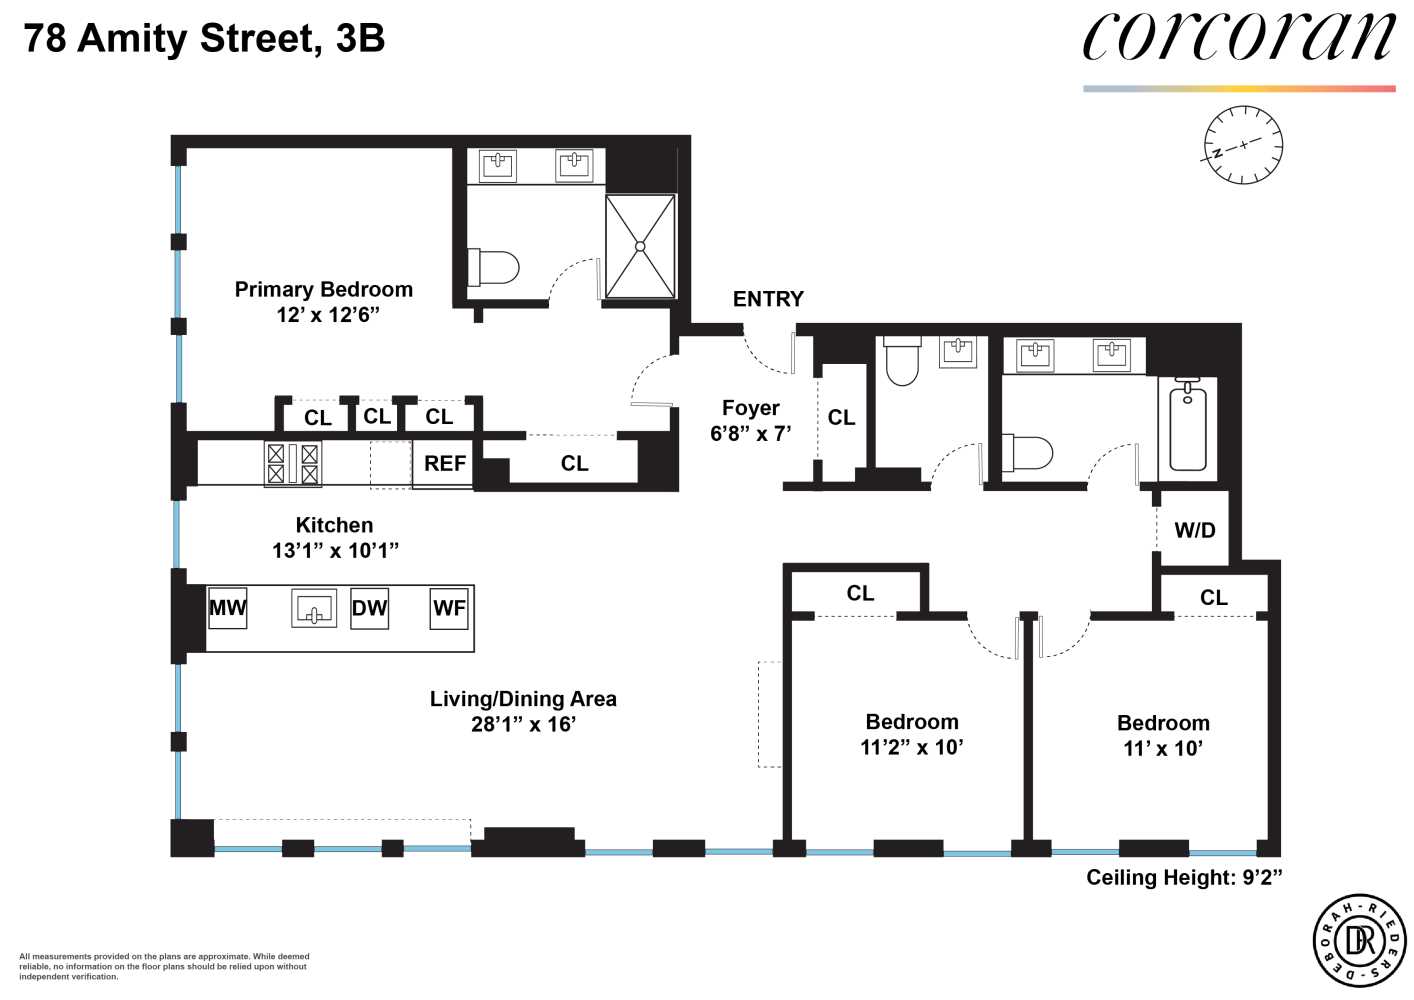 Floorplan for 78 Amity Street, 3B